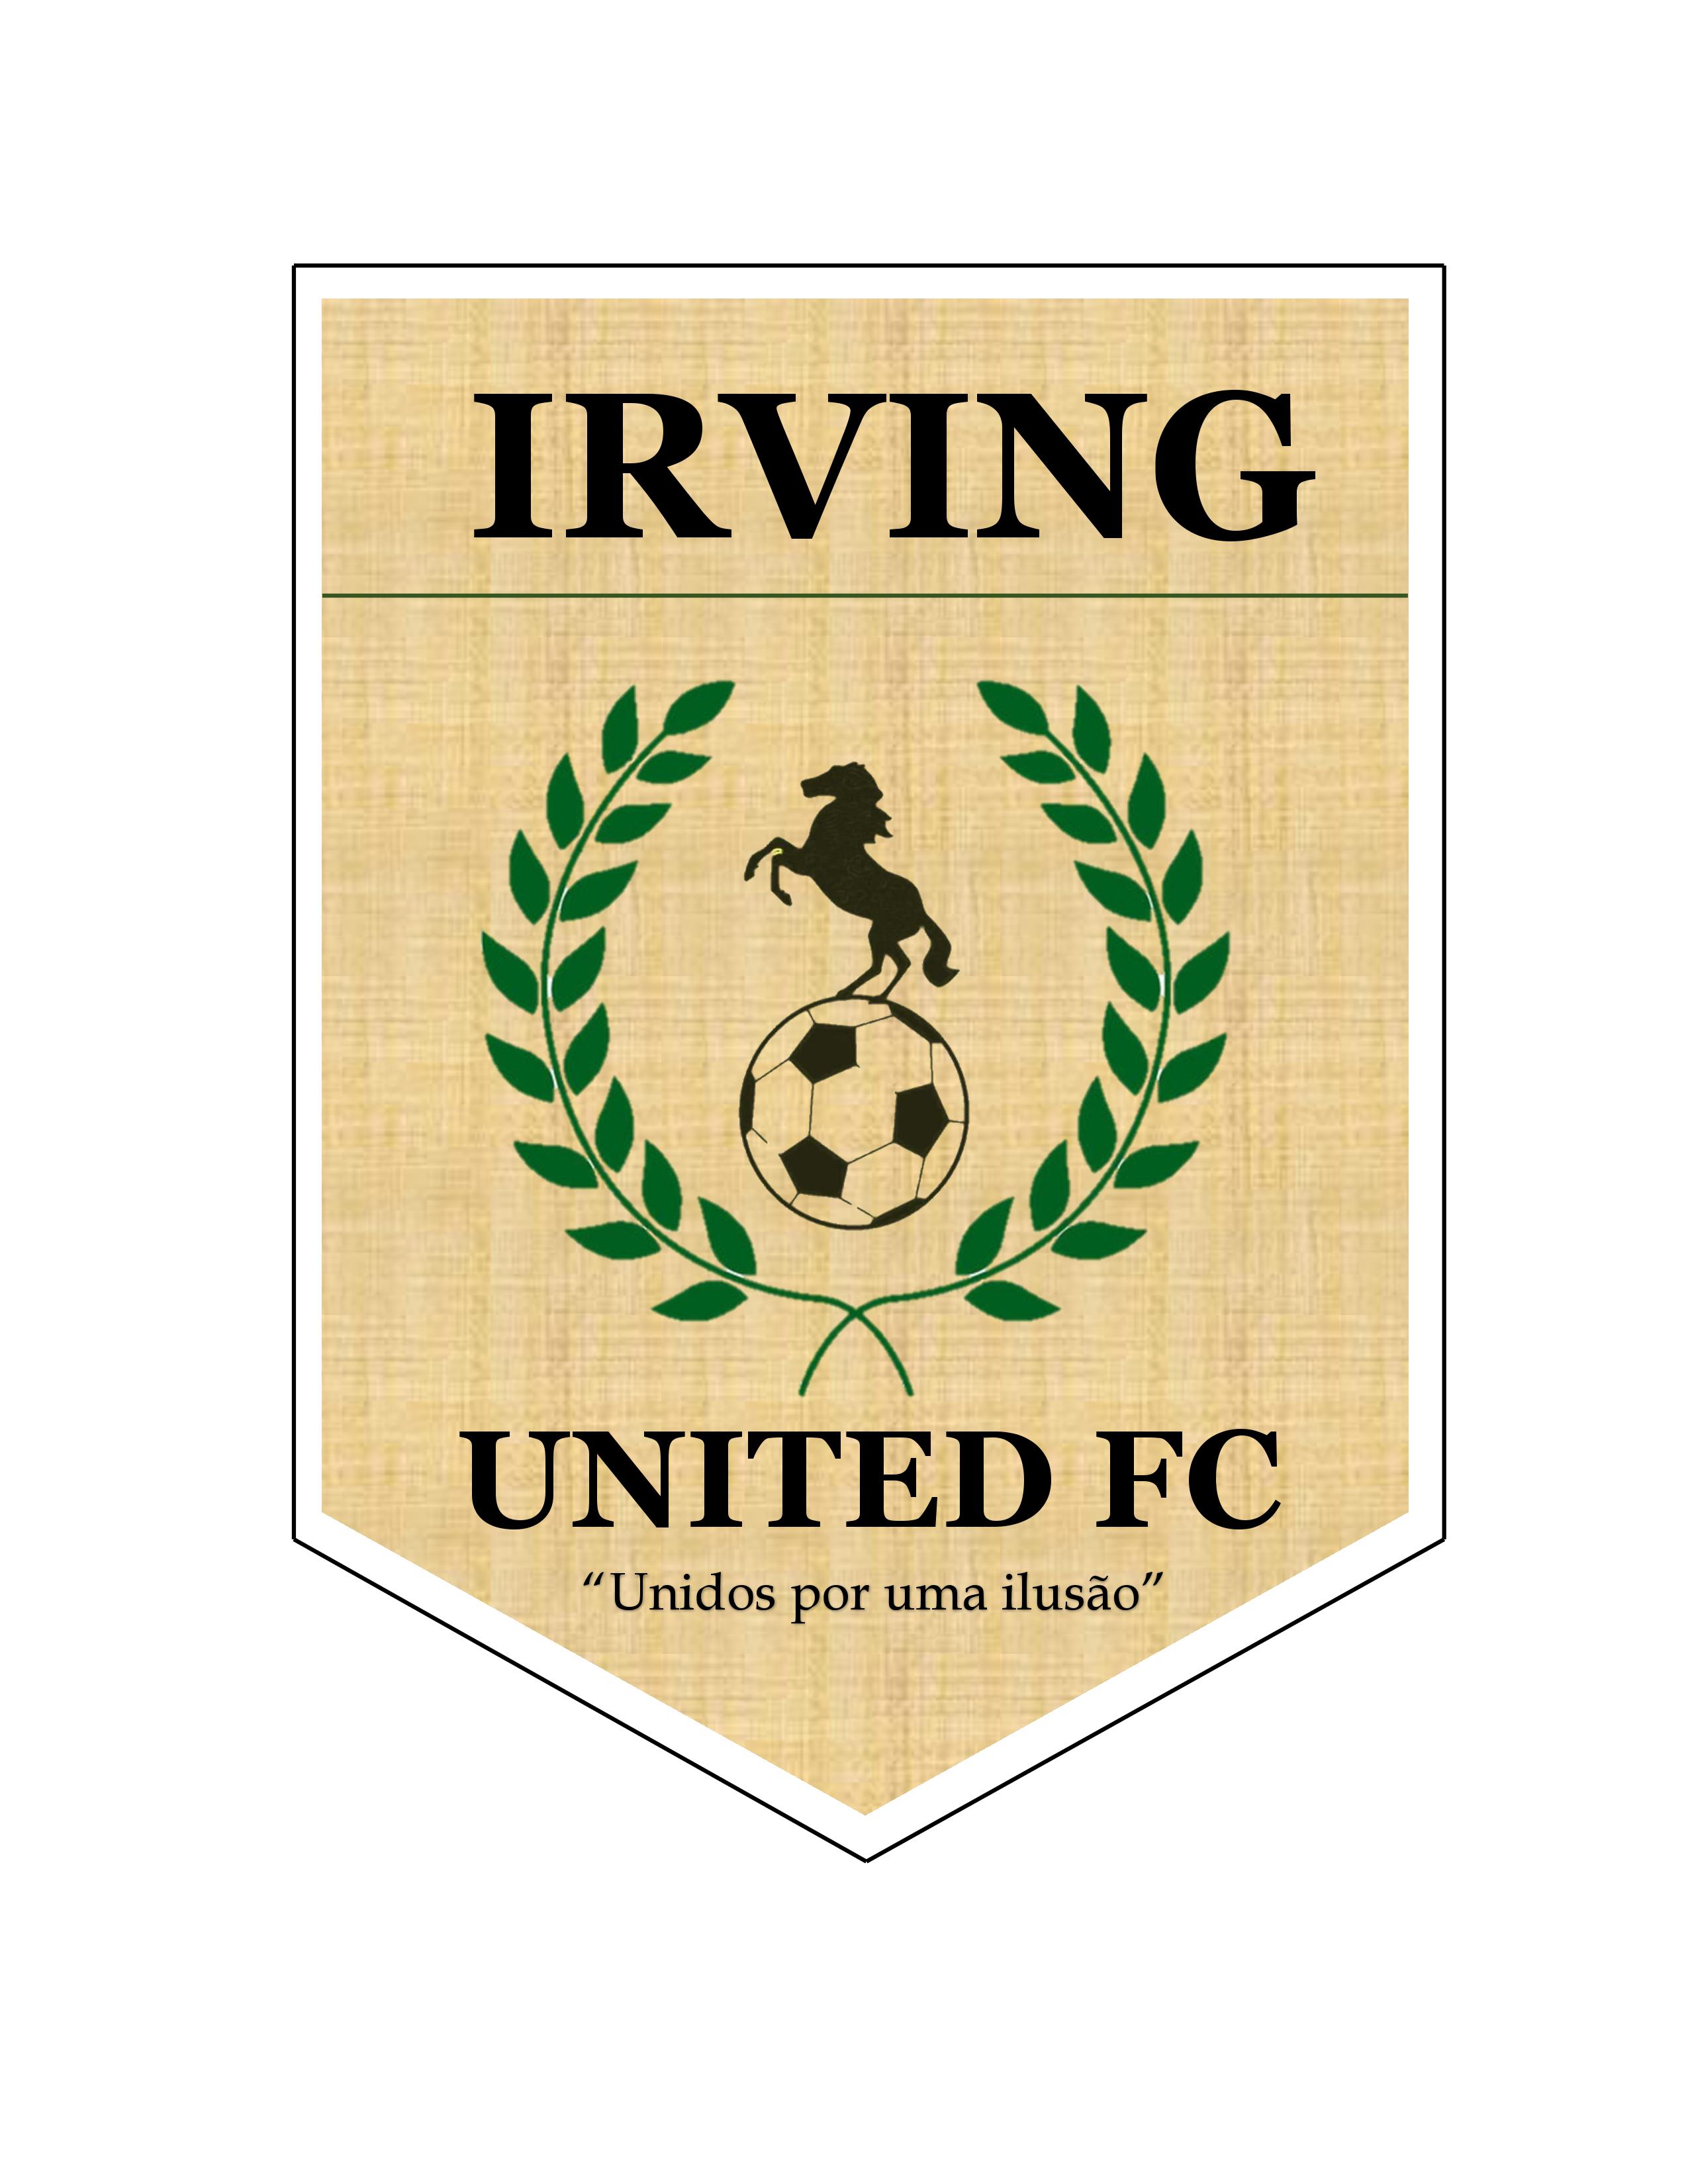 Irving United FC team badge